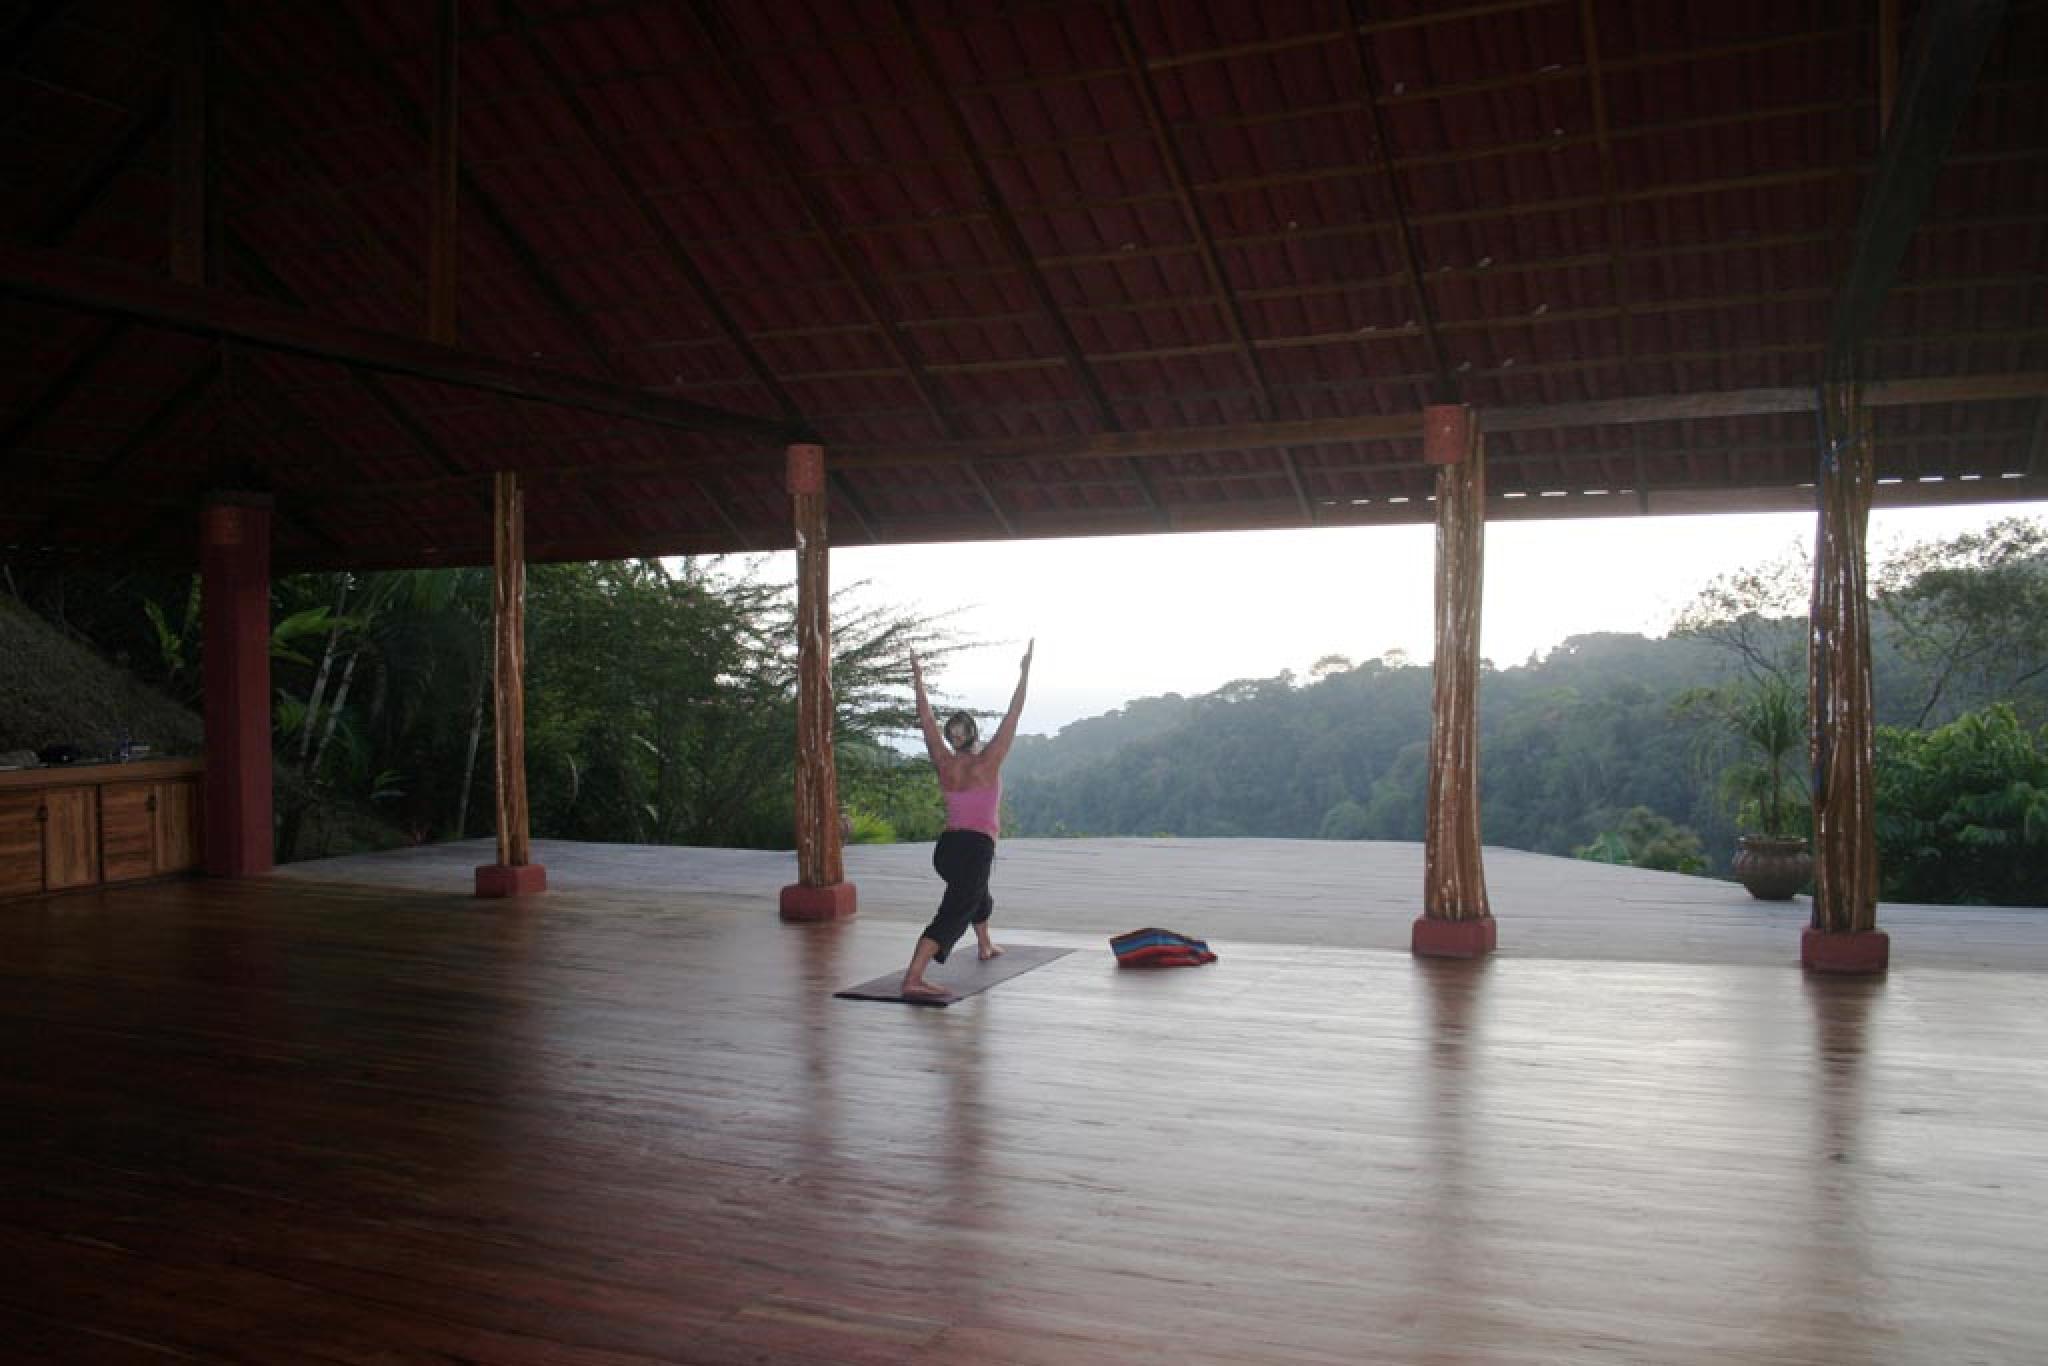 Osa Peninsula Yoga Retreat - LUNA LODGE Costa Rica